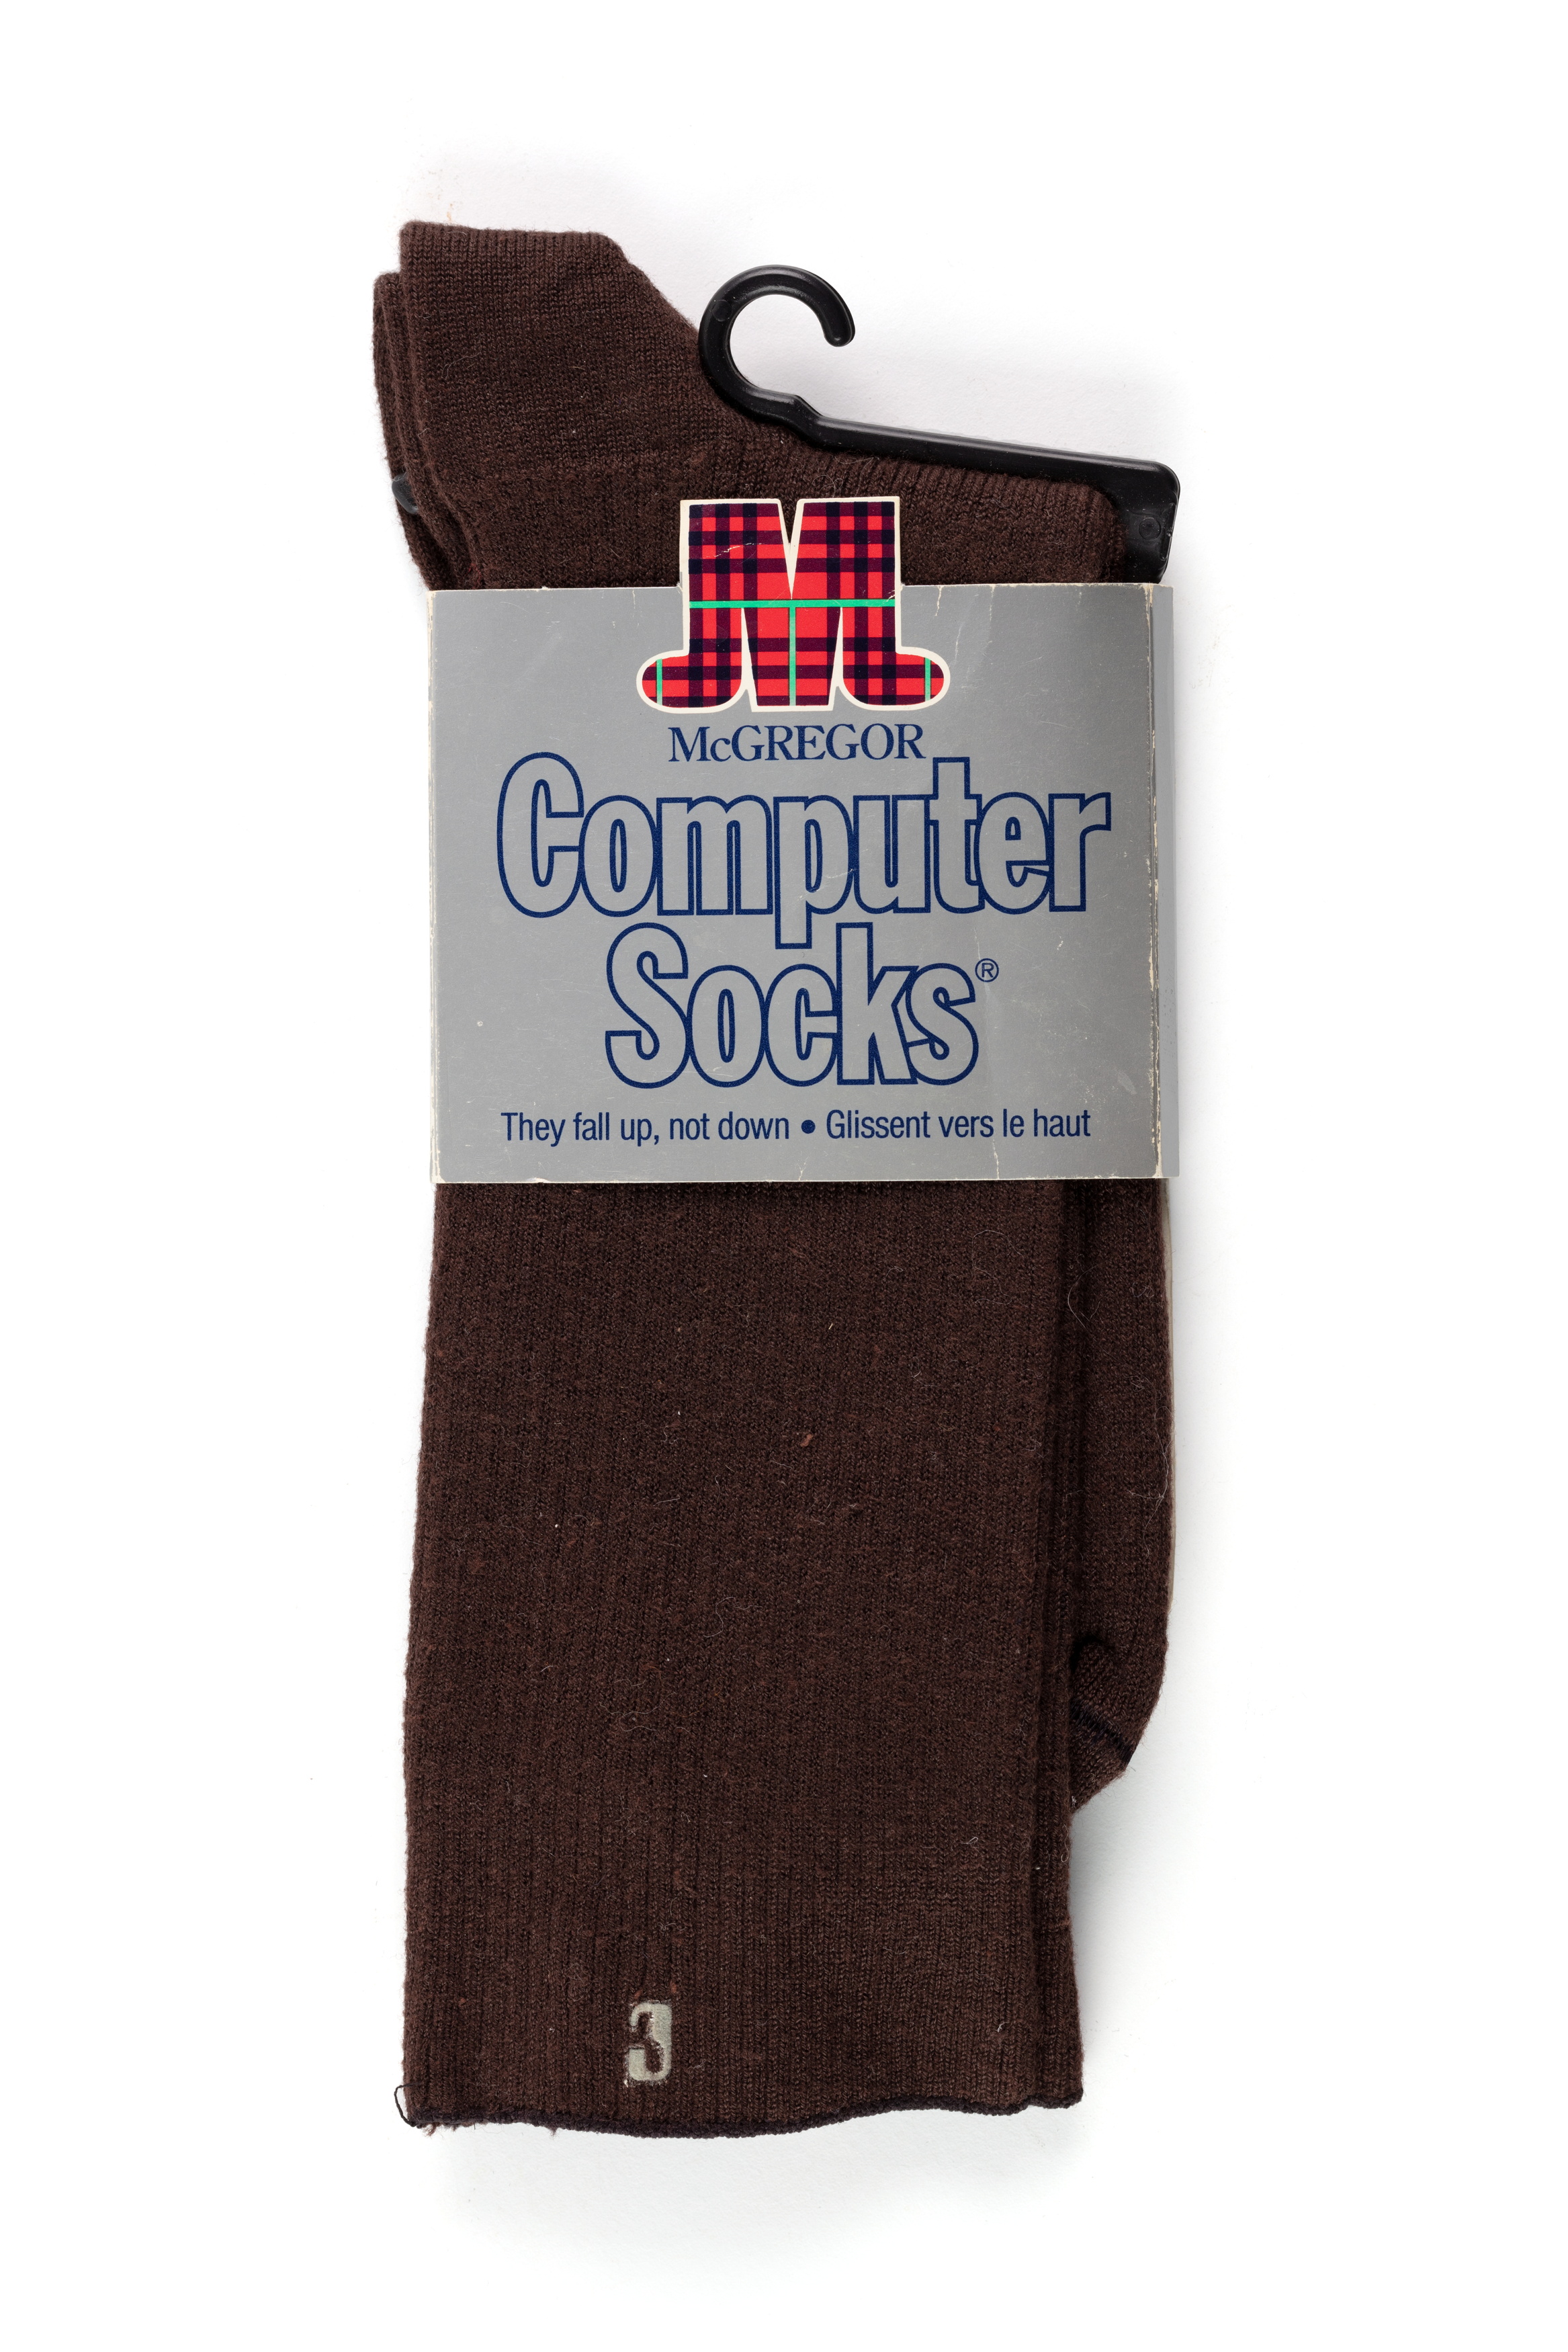 Pair of mens 'McGregor Computer Socks' by McGregor Socks